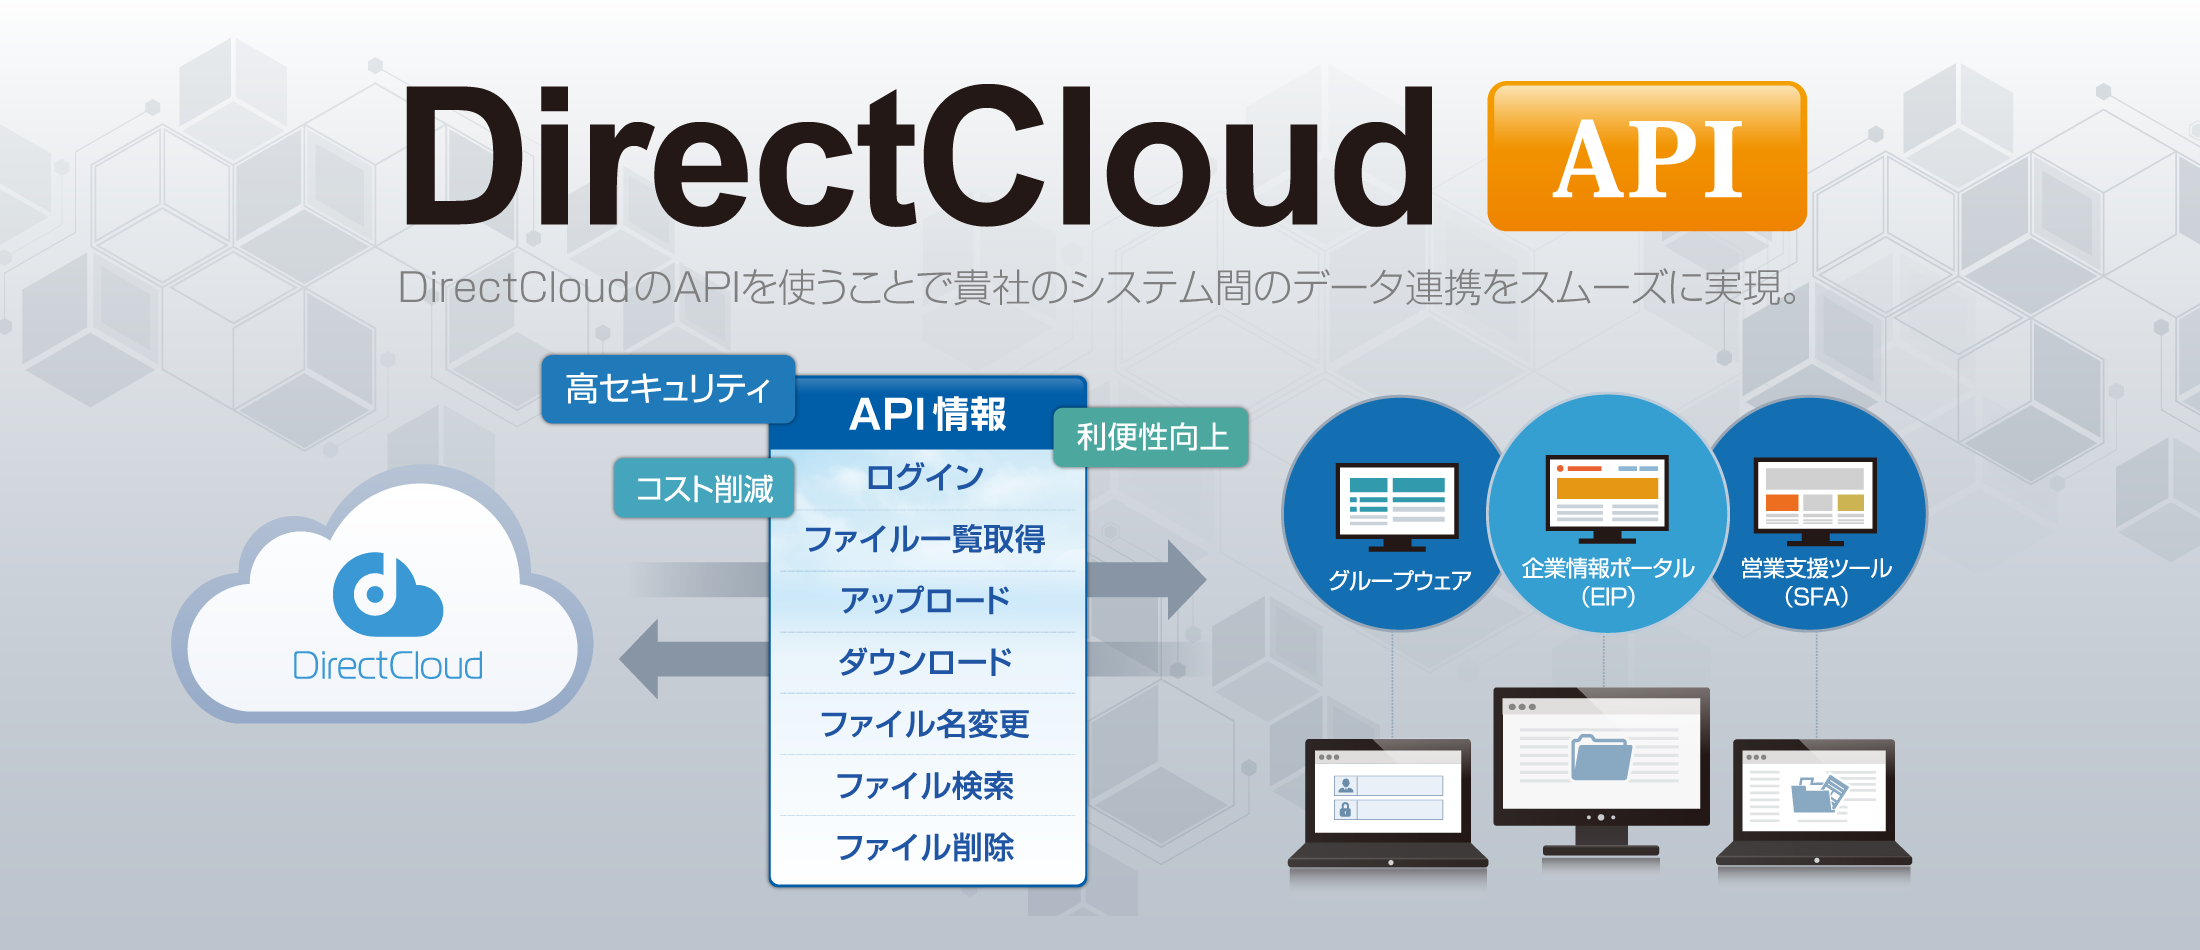 DirectCloud-BOX のAPI連携により、さらに広がるファイル共有の可能性